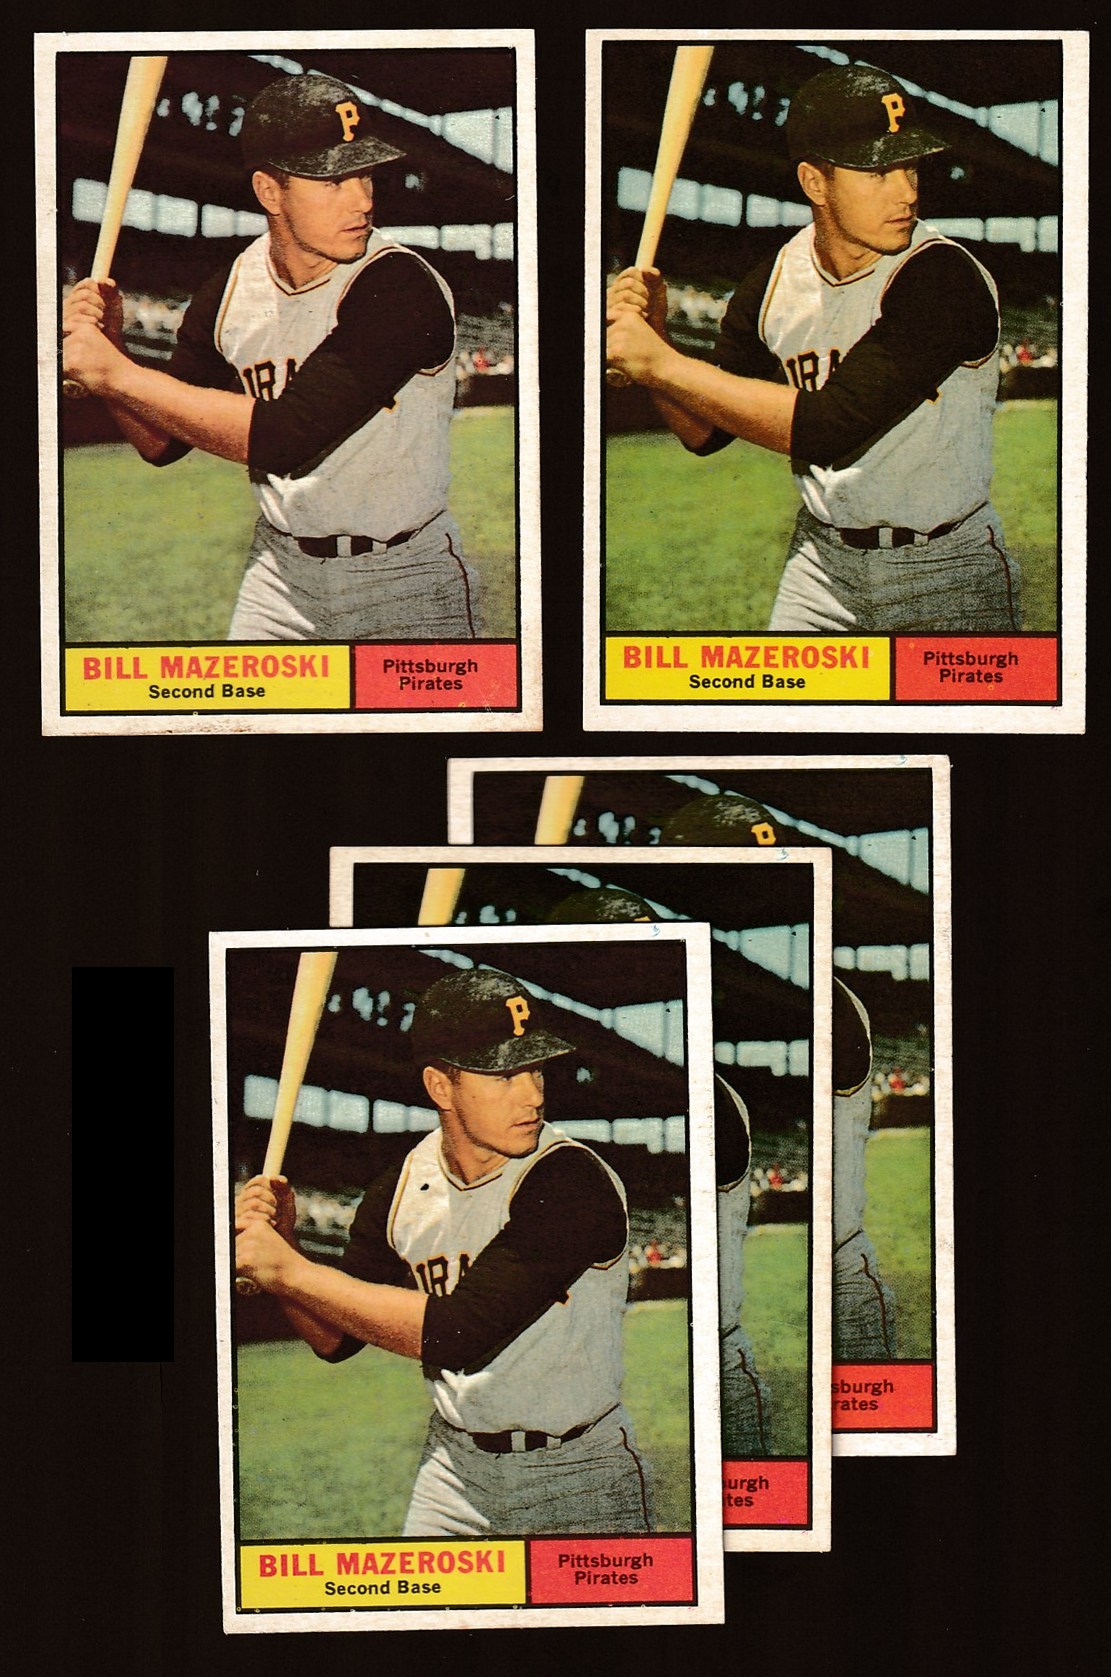 1961 Topps #430 Bill Mazeroski [#] SHORT PRINT [VAR:blue mark] (Pirates) Baseball cards value